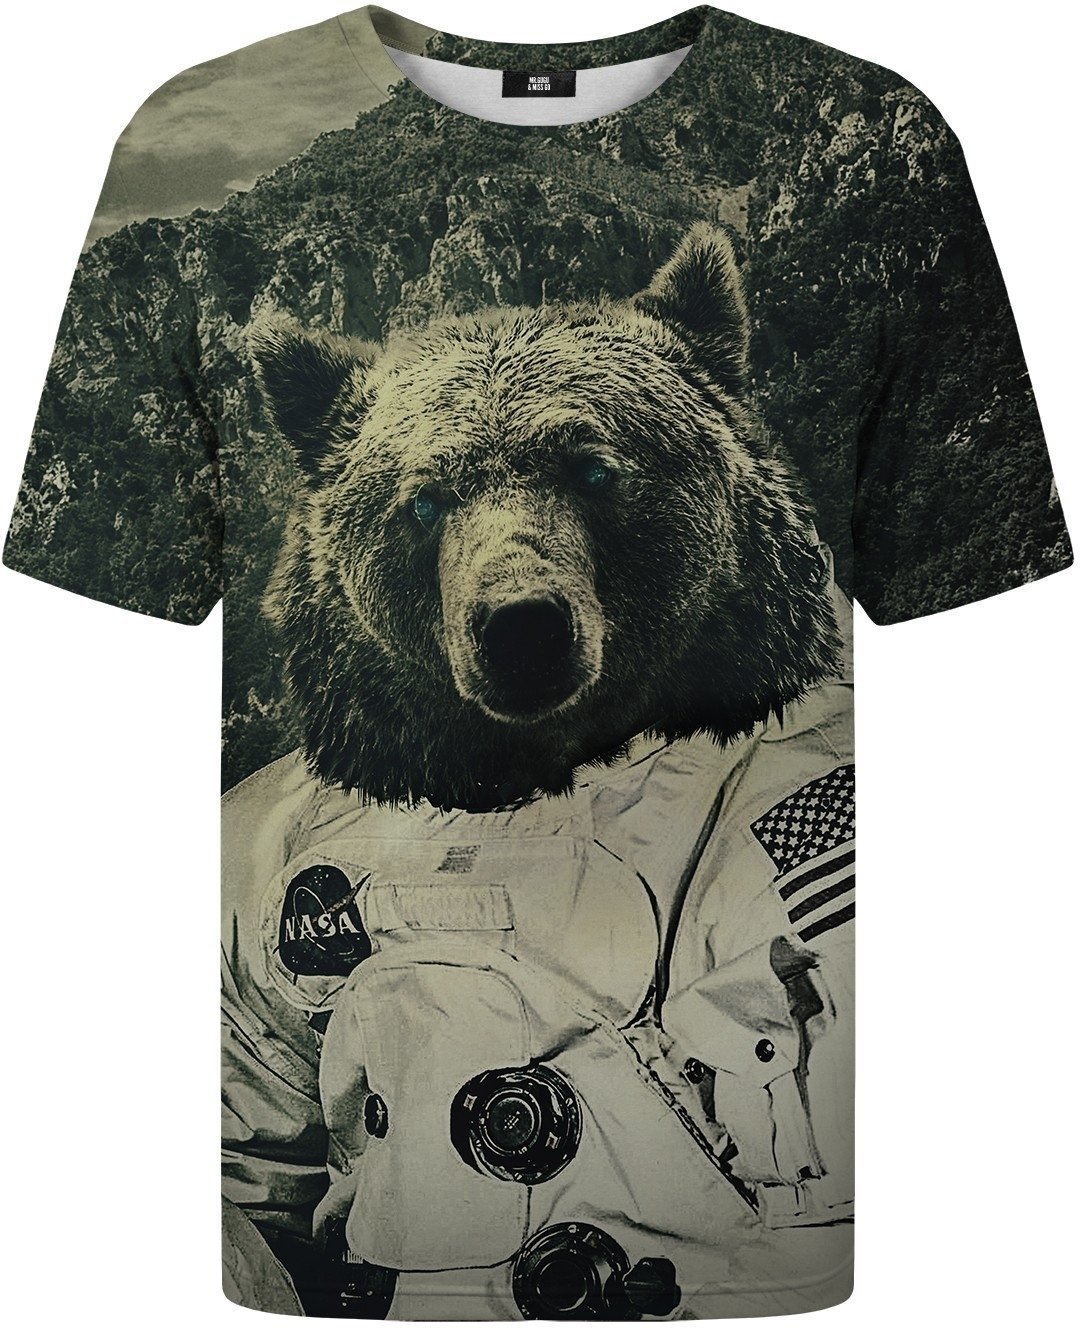 Shirt Mr. Gugu and Miss Go Shirt NASA Bear S